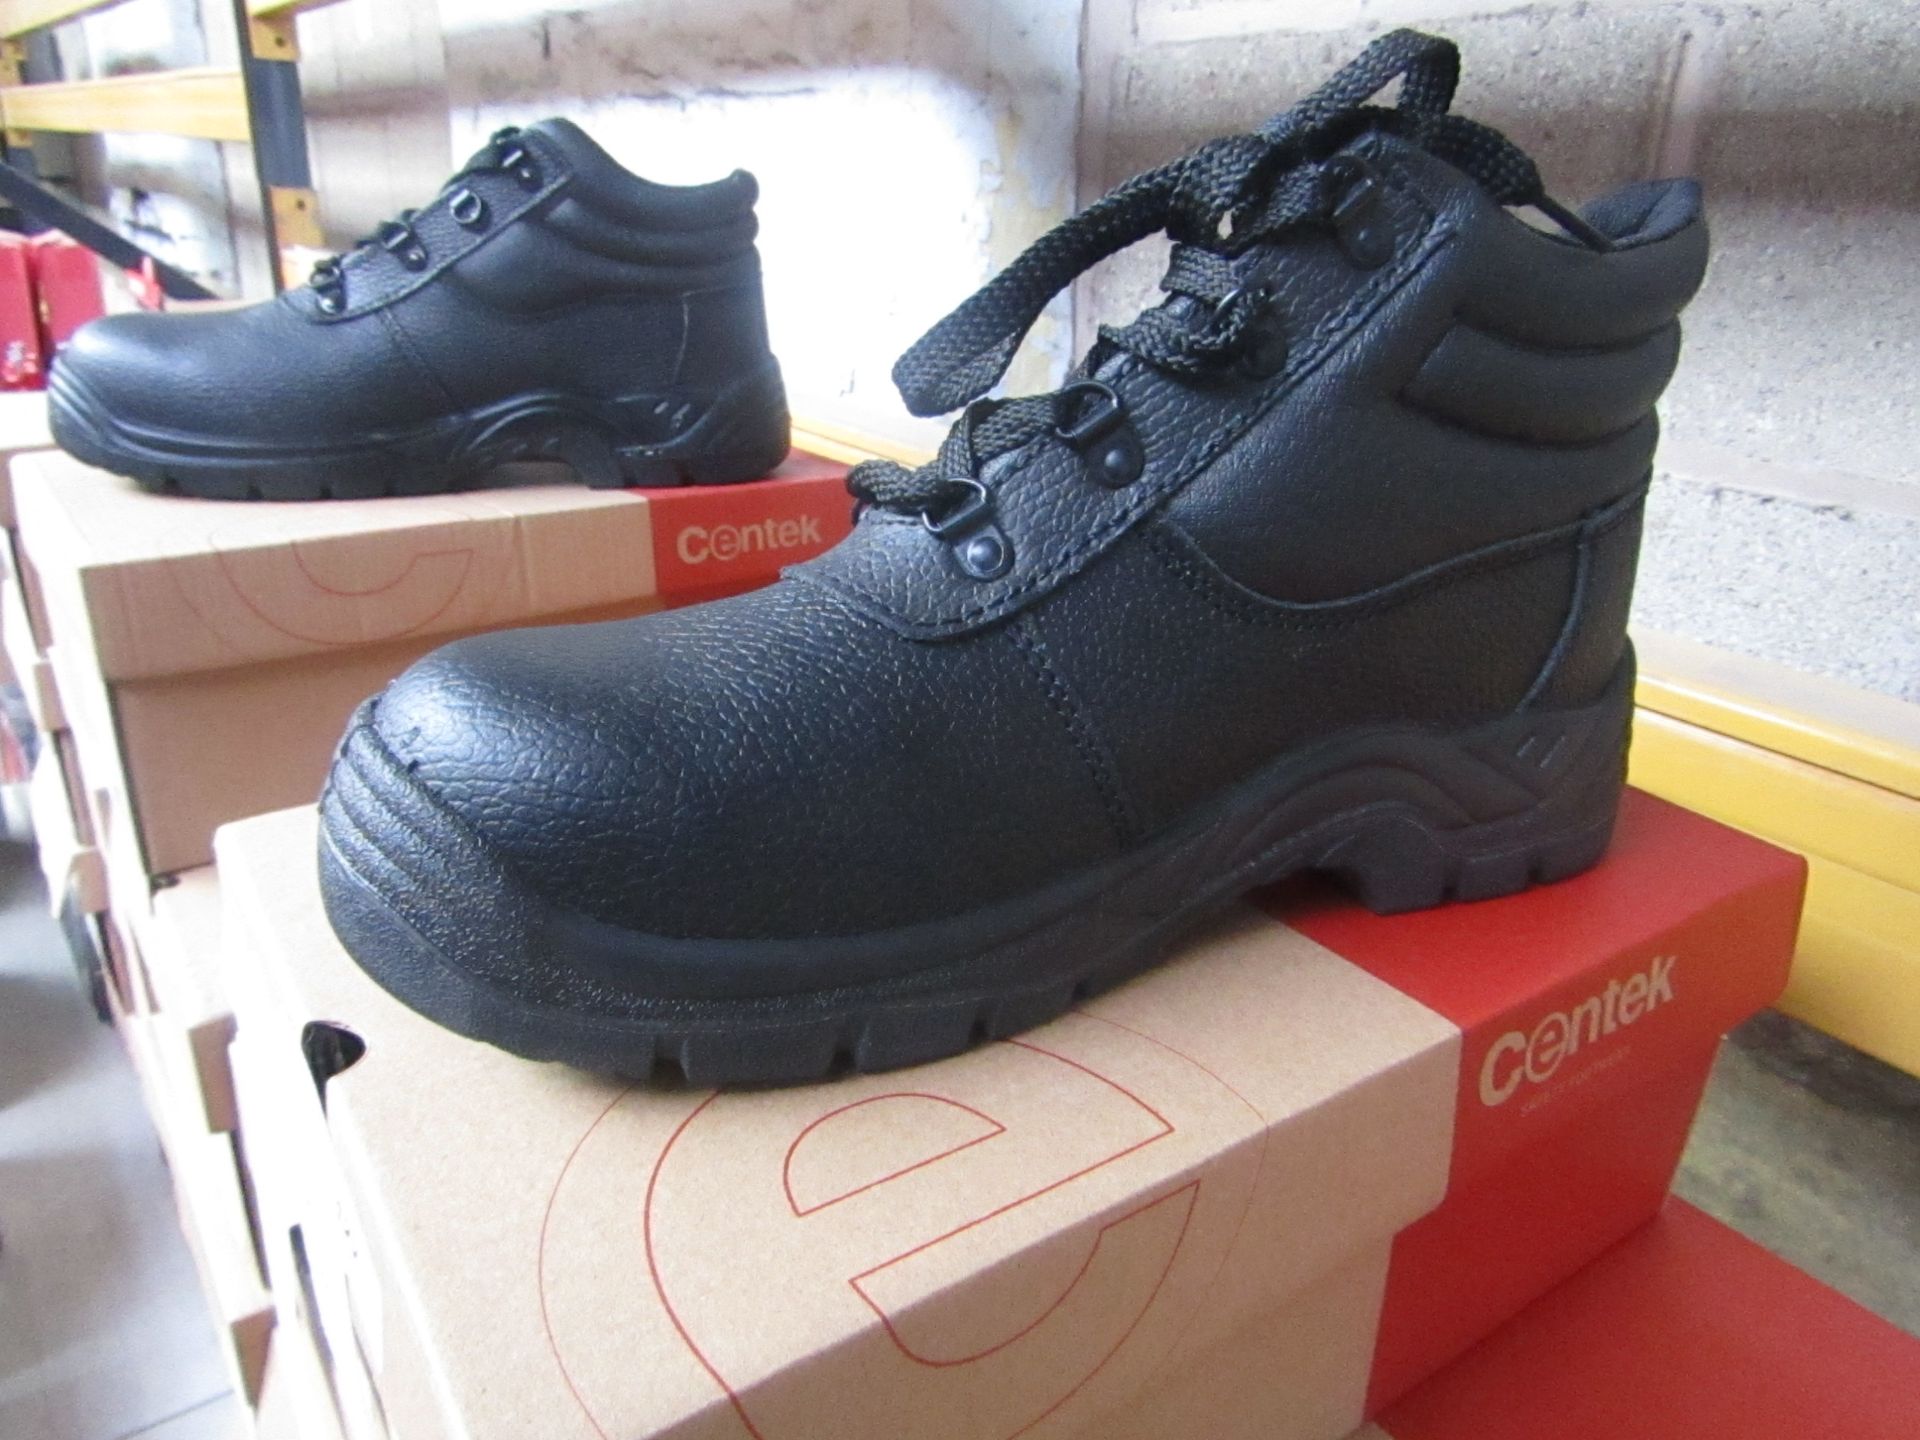 Centek Black Steel Toe Cap Boot size 8 New & Boxed.